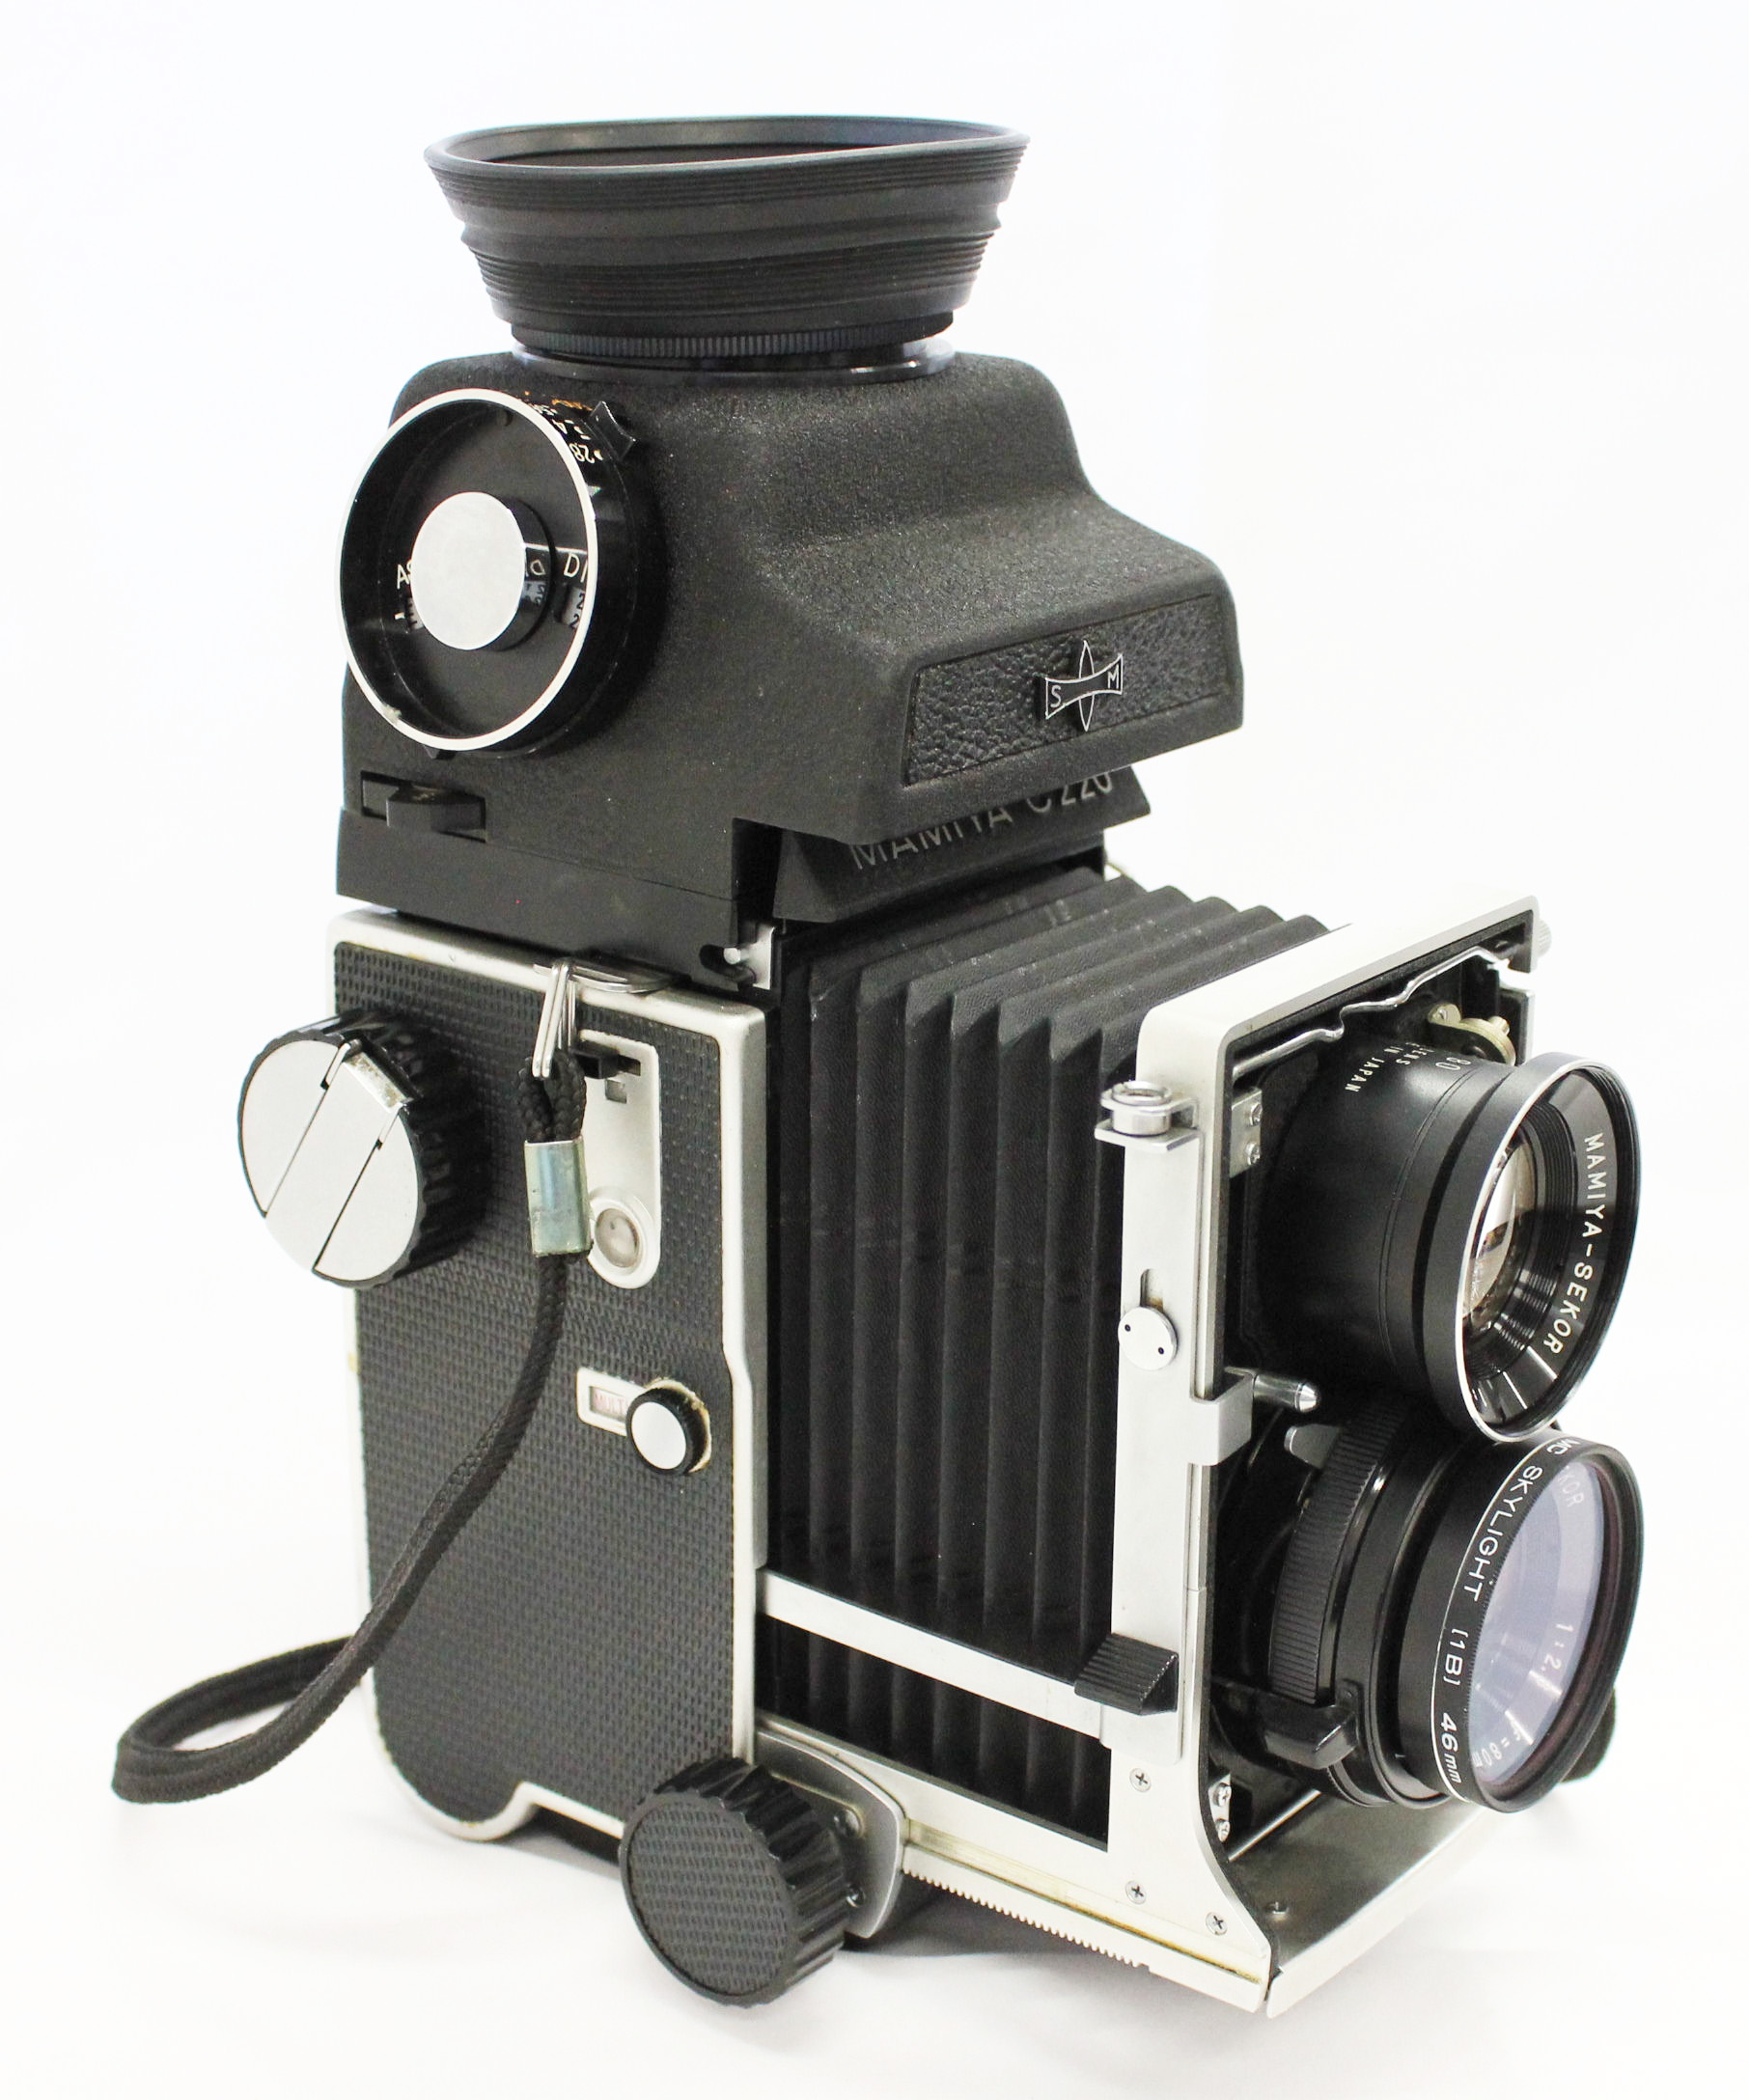  Mamiya C220 Pro TLR Medium Format Camera with 80mm F2.8 and CdS Magnifying Hood from Japan Photo 1